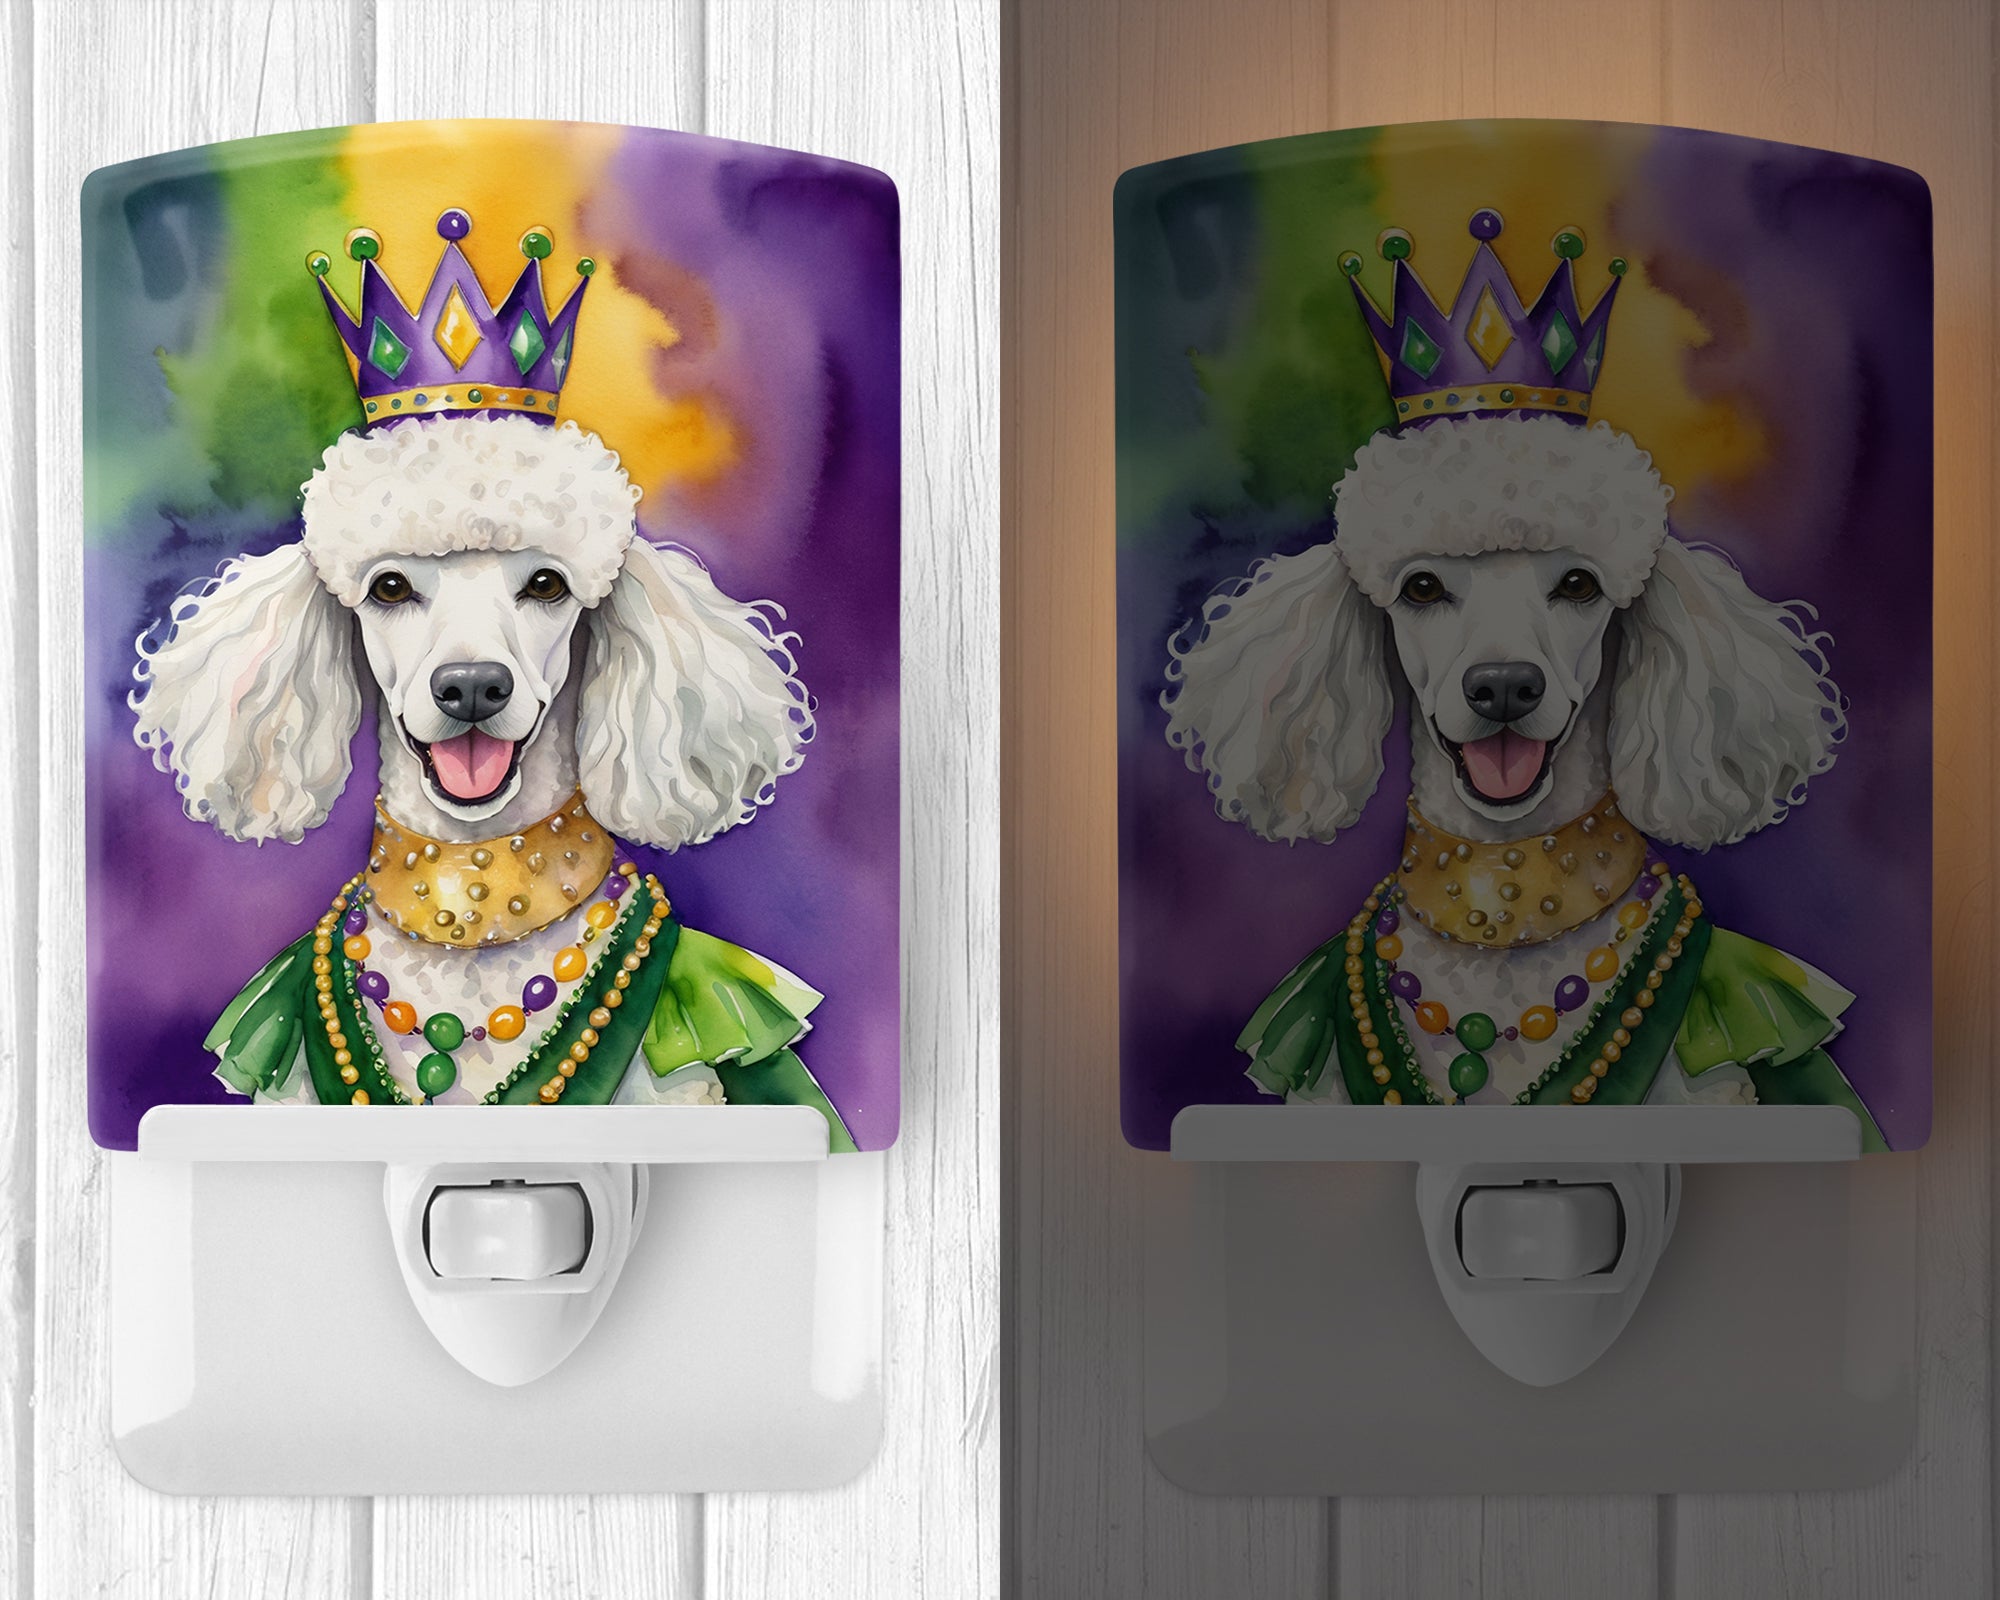 White Poodle King of Mardi Gras Ceramic Night Light